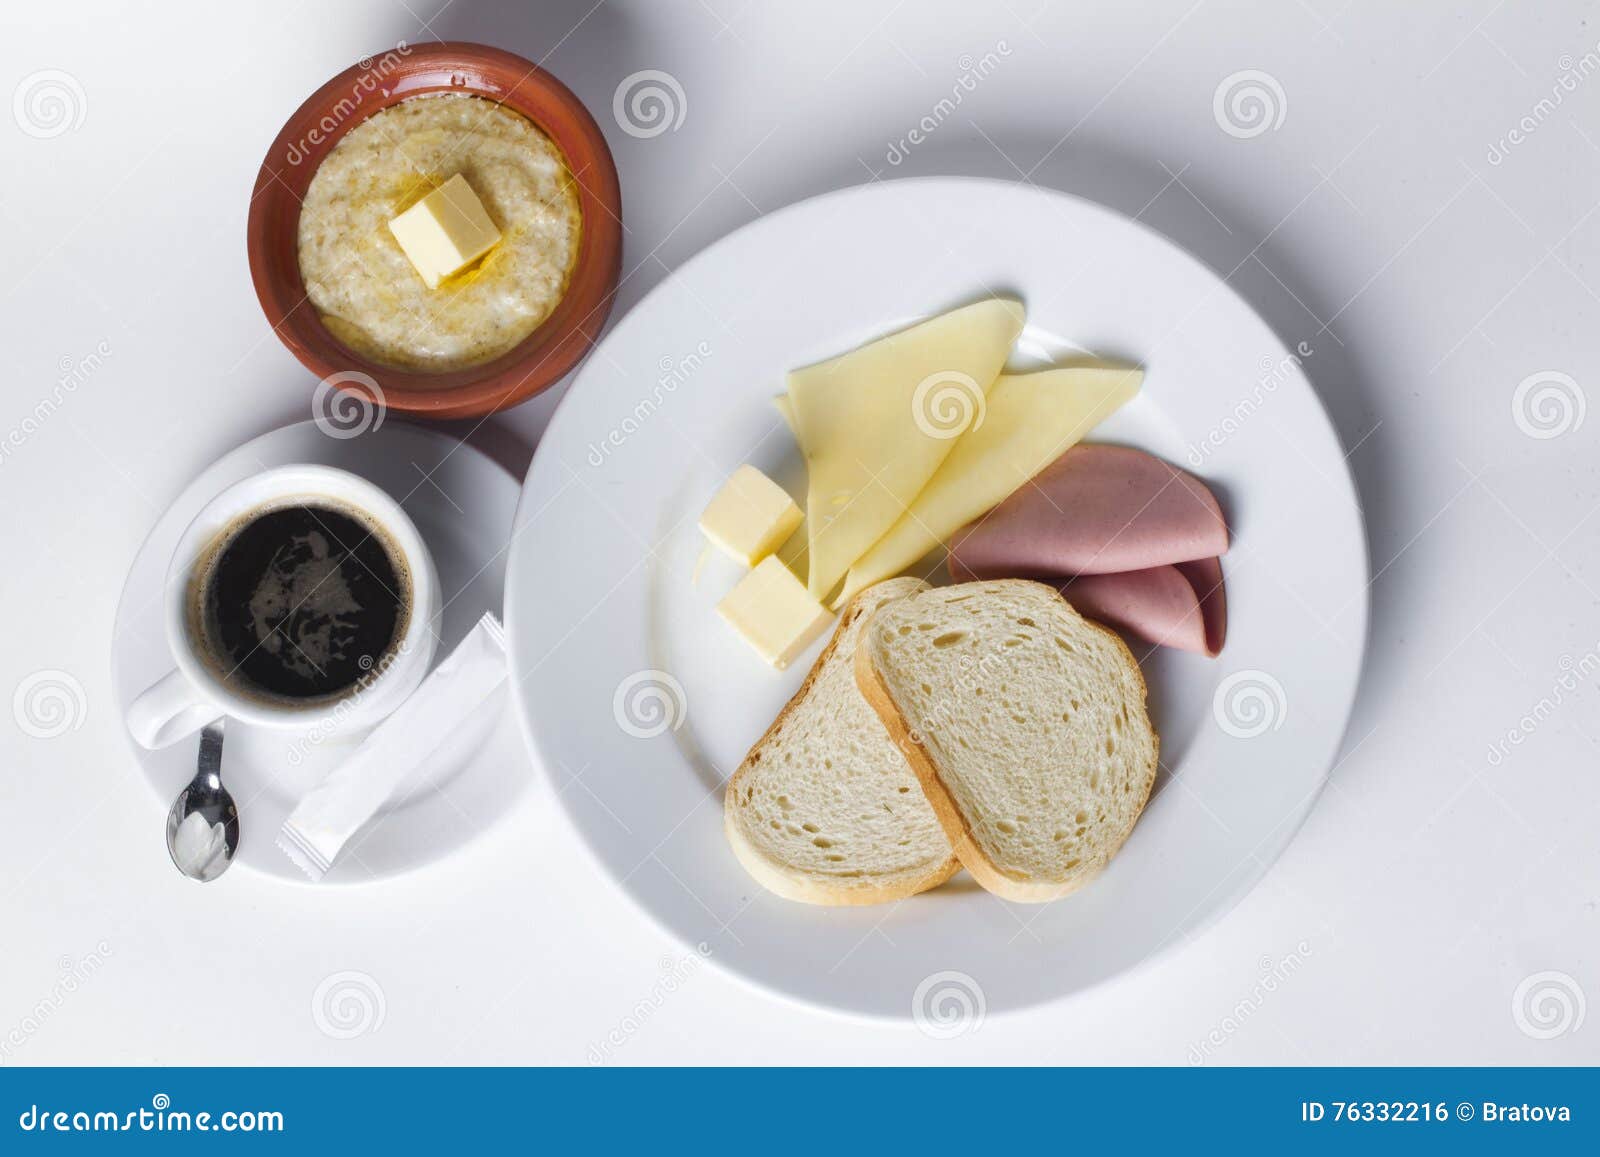 Чай сахар колбаса сыр хлеб. Каша и бутерброд с сыром. Чай хлеб сыр. Хлеб с маслом и колбасой. Хлеб с маслом и кофе.